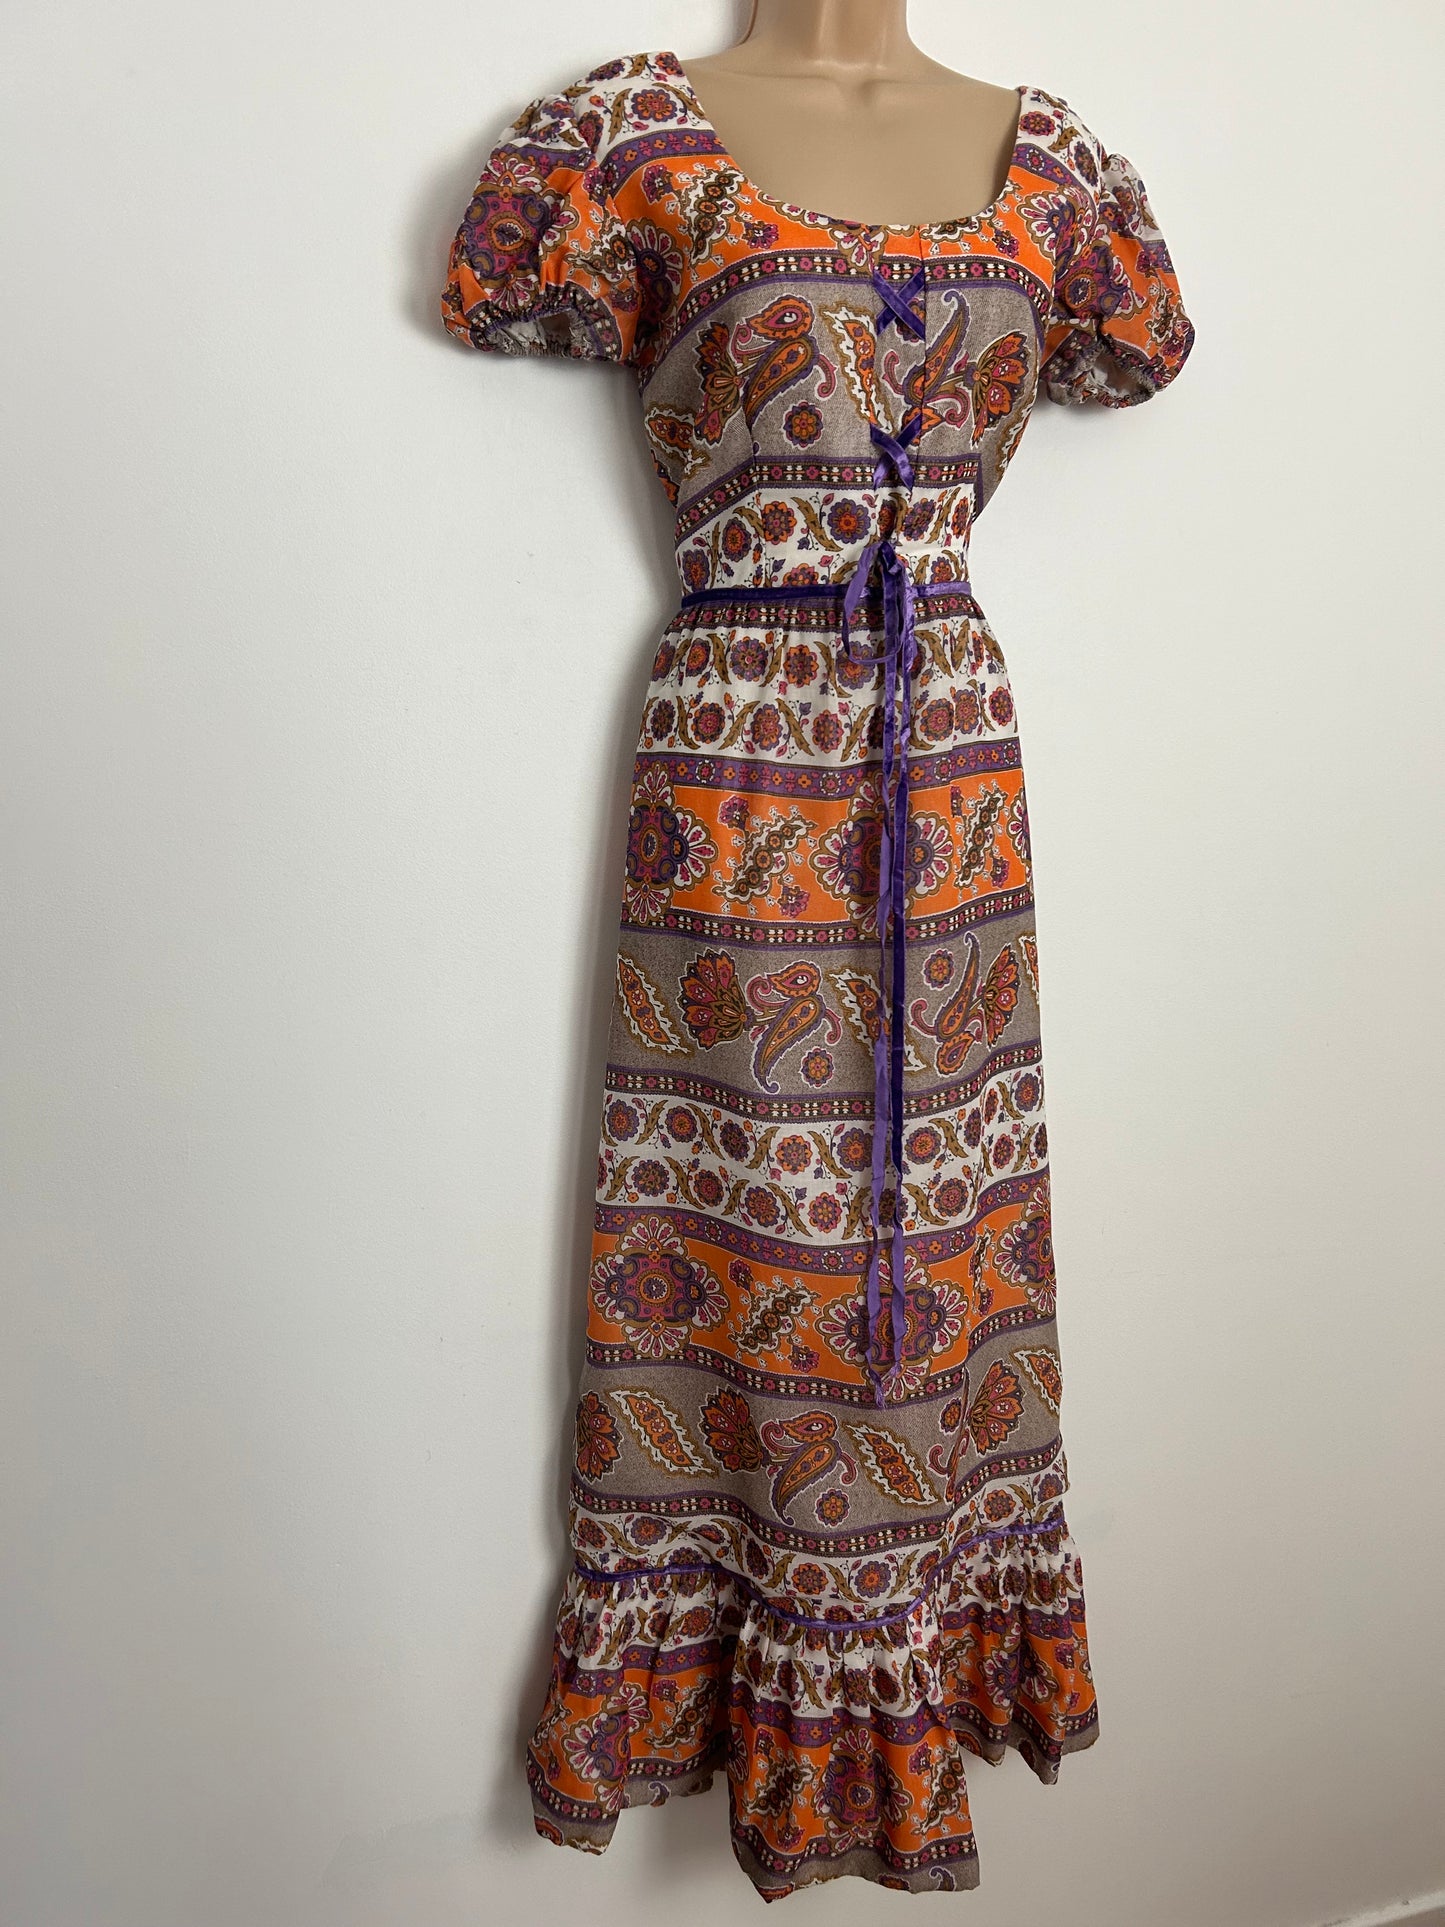 Vintage 1970s CALIFORNIA THE LOOK YOU LOVE UK Size 10-12 Orange Beige & Purple Floral & Paisley Print Cotton Mix Prairie Maxi Dress